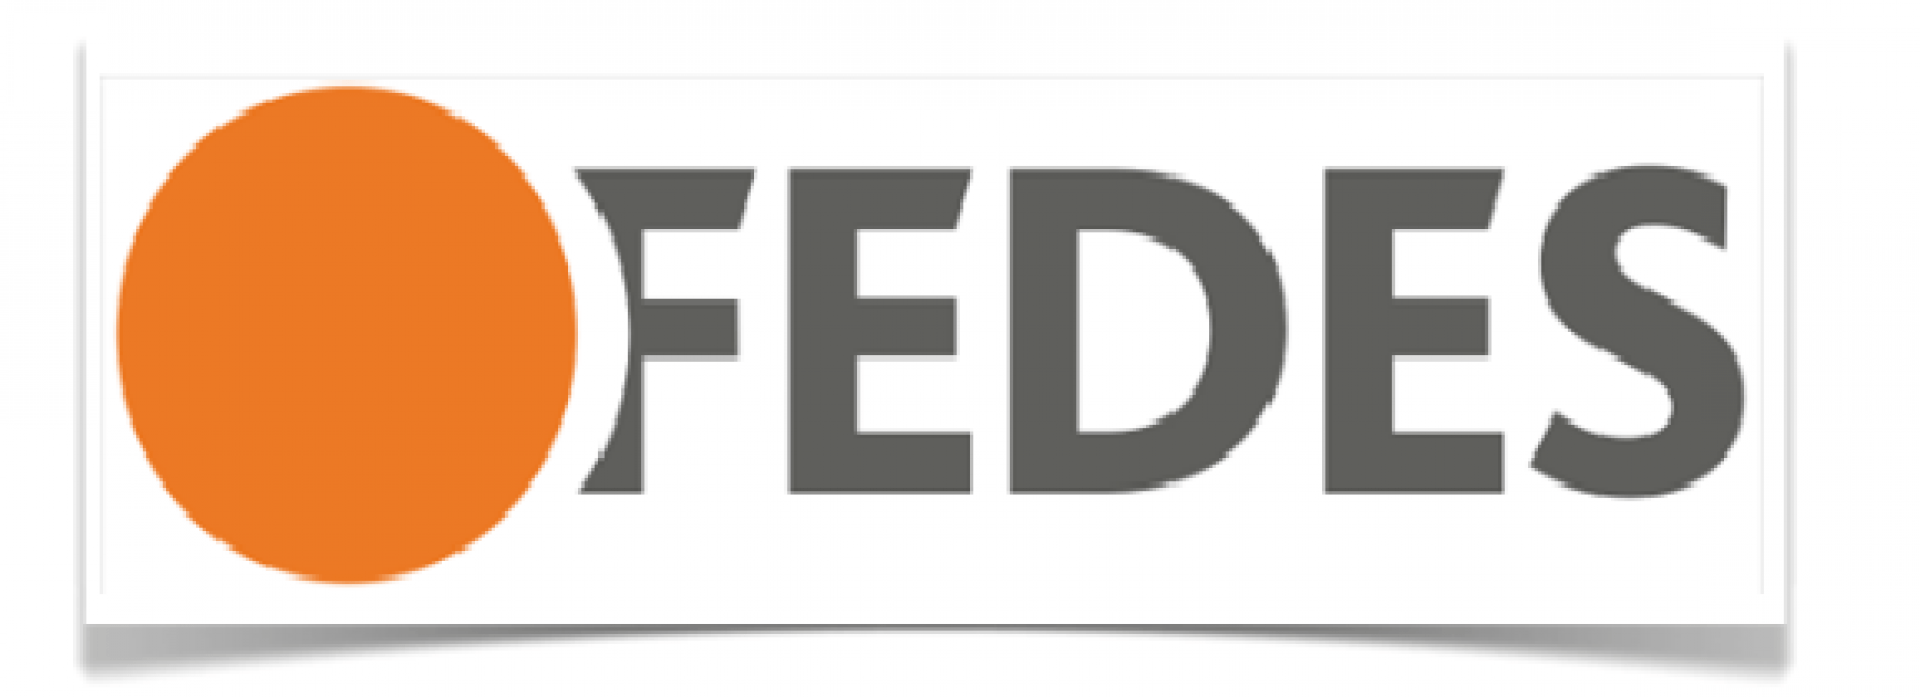 Fede's Logo - Inicio - Fundación Fedes